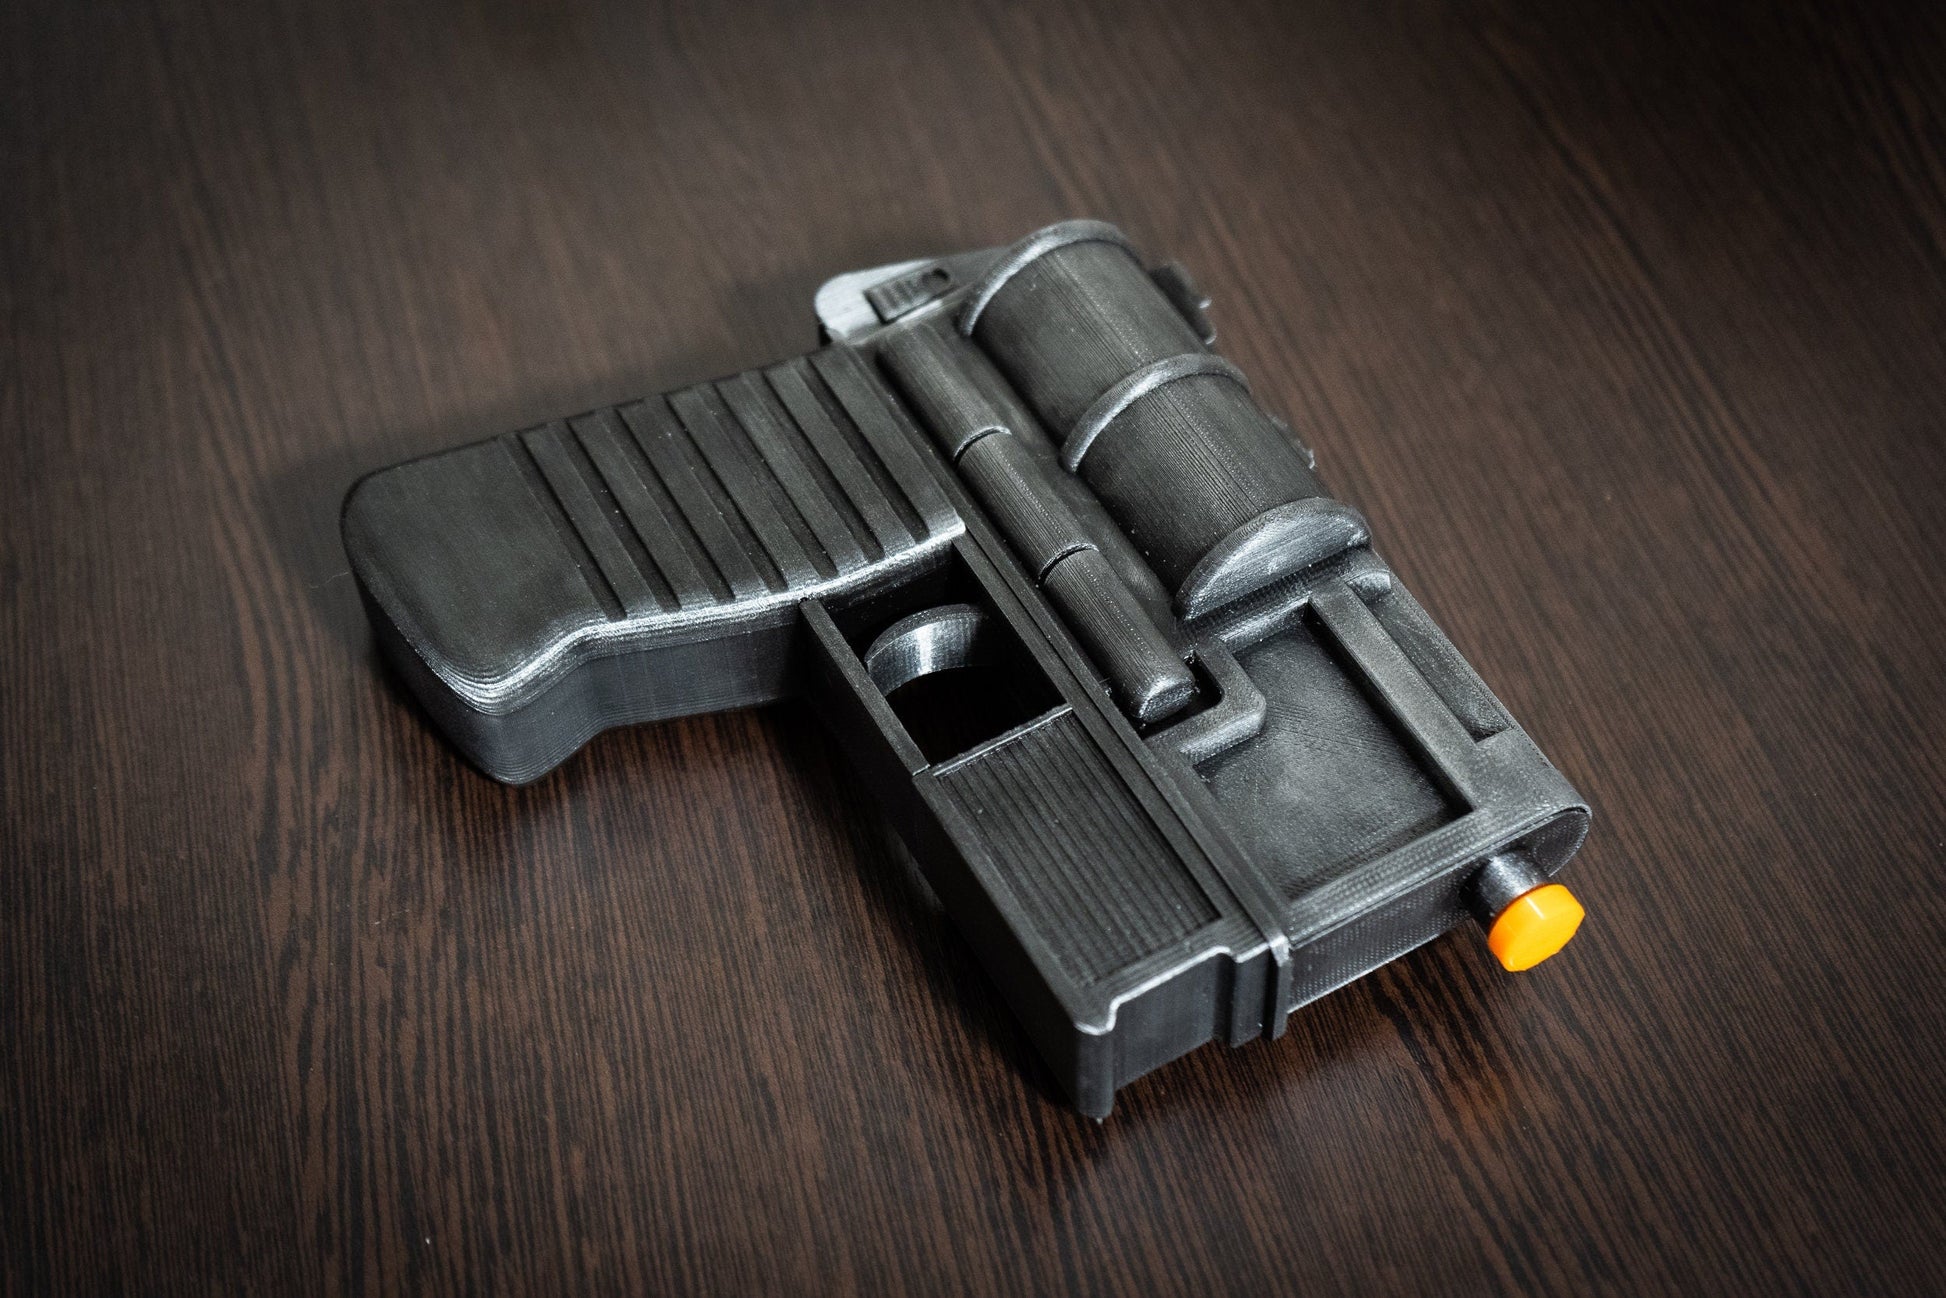 Mara Jade blaster pistol | Star Wars Replica | Star Wars Props | Star Wars Cosplay - 3DPrintProps